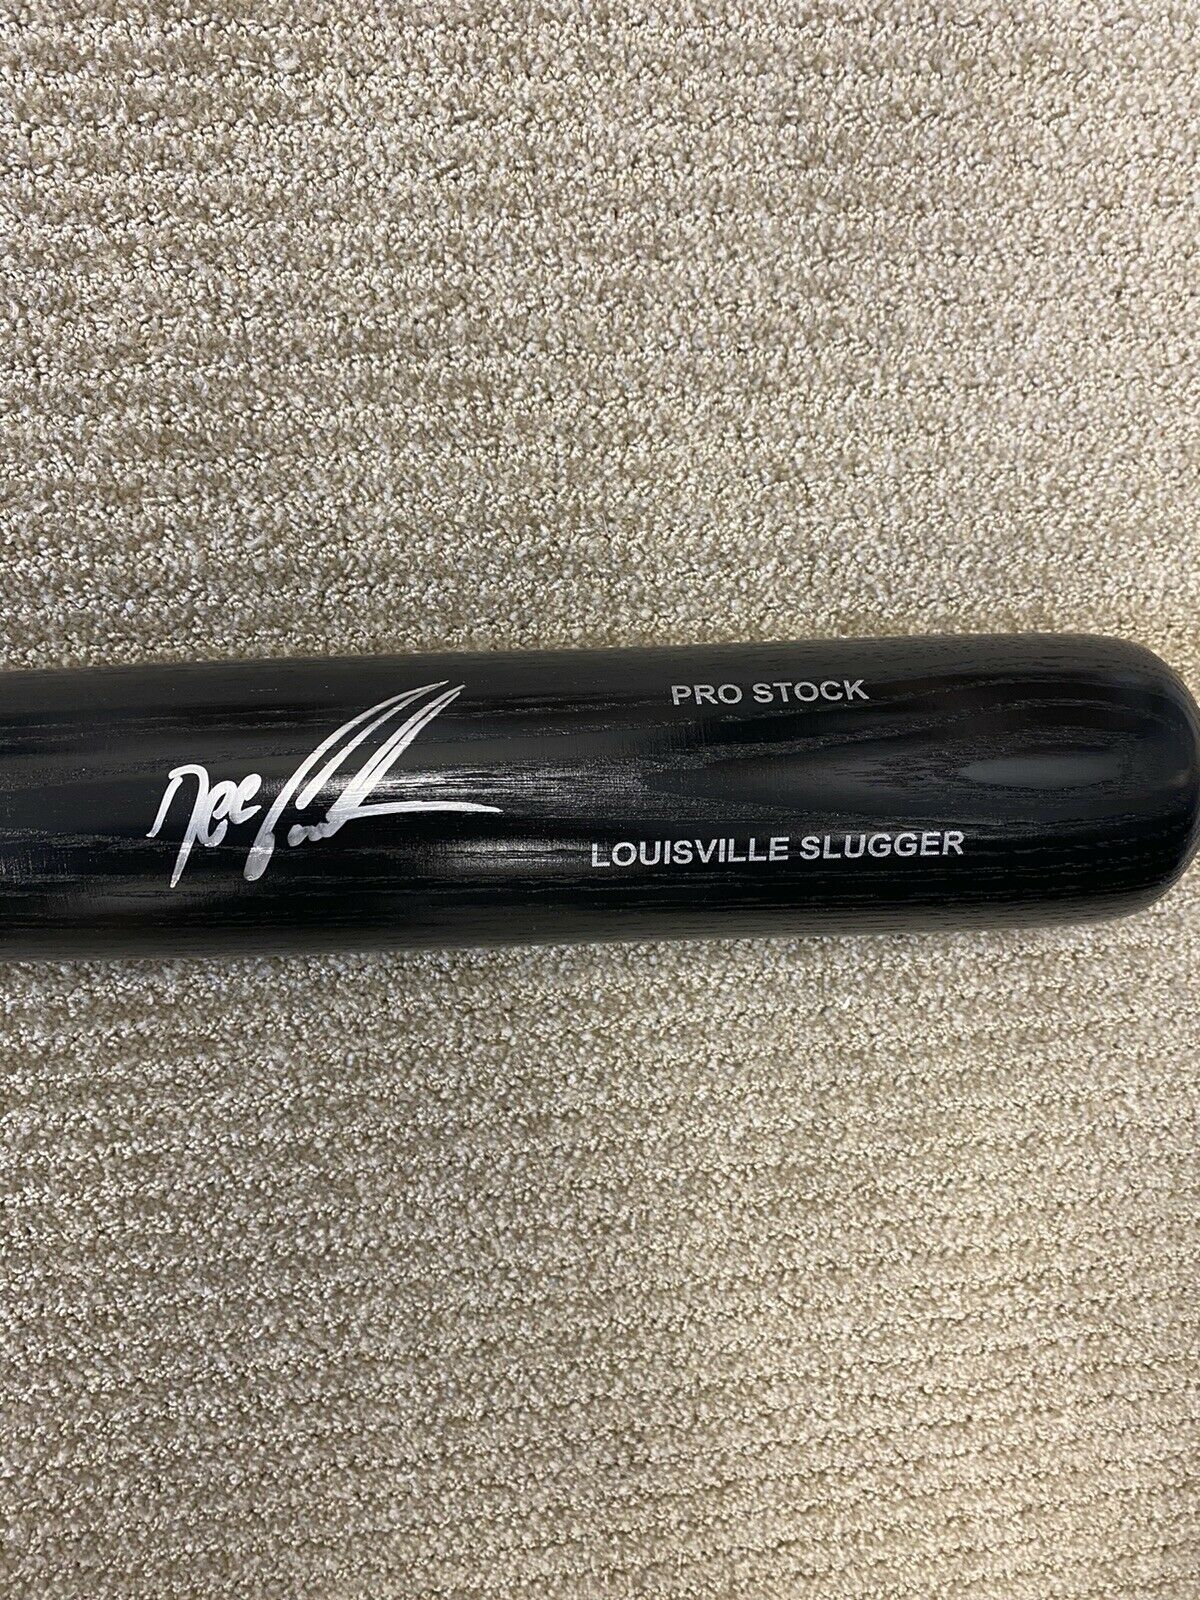 Doc Gooden Auto/signed Pro Stock Louisville Slugger Bat Jsa Coa Mets Yankees